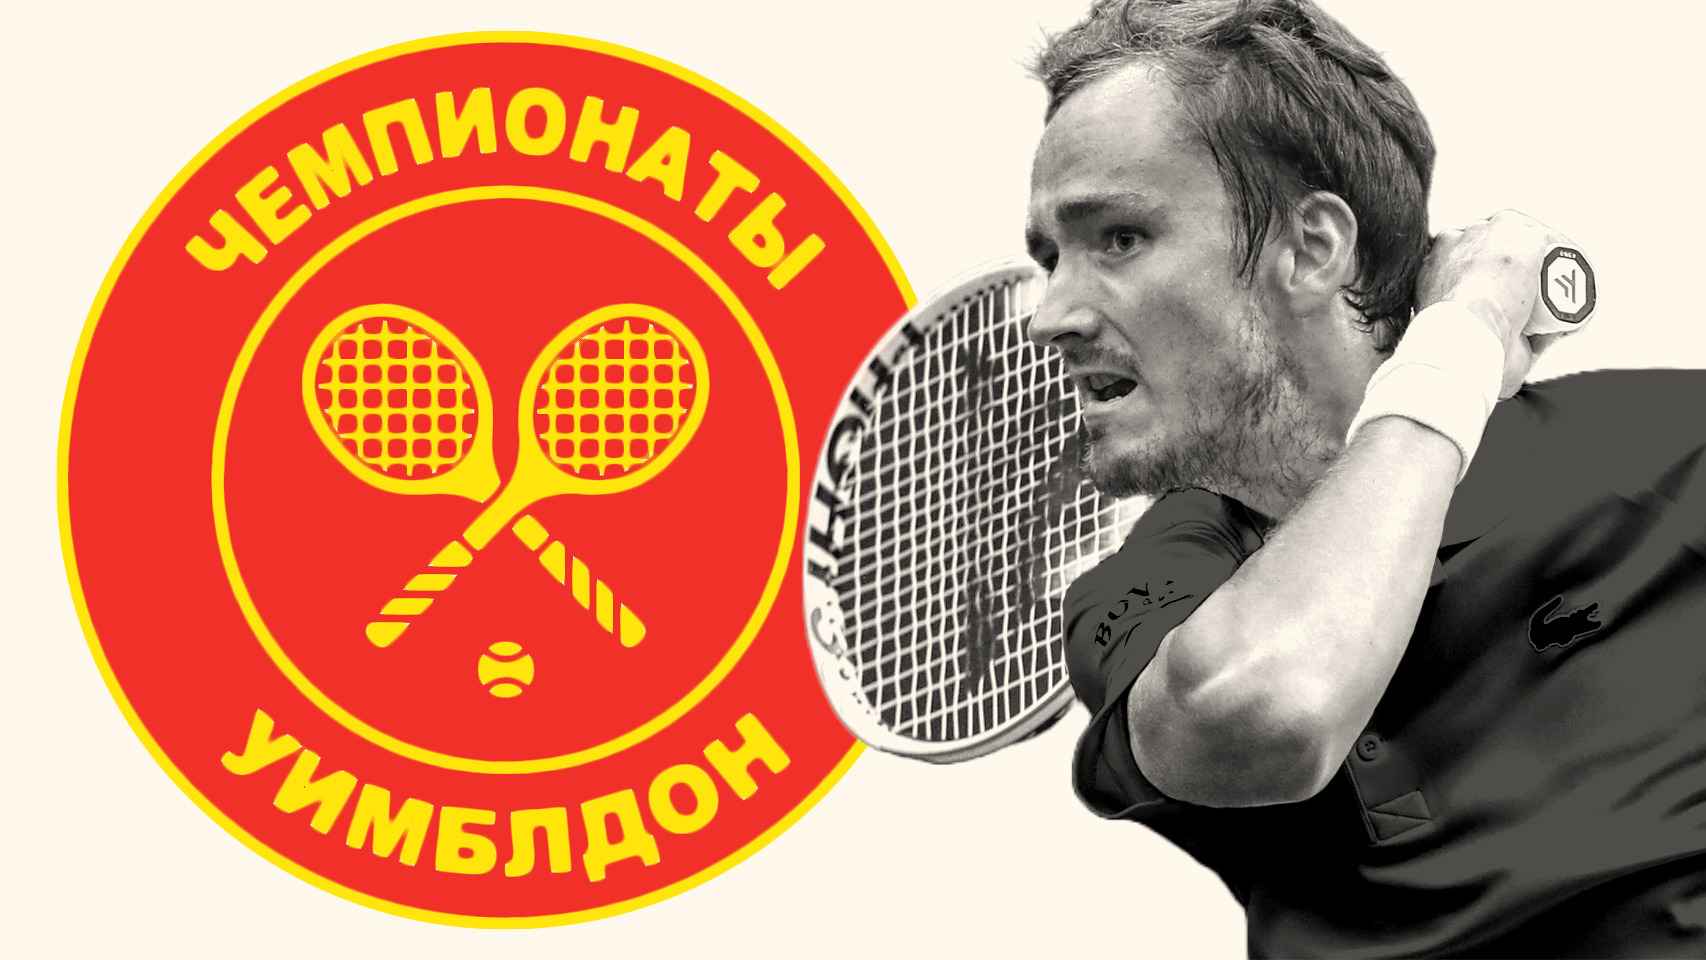 Wimbledon veta a los tenistas rusos y se prepara contra ataques